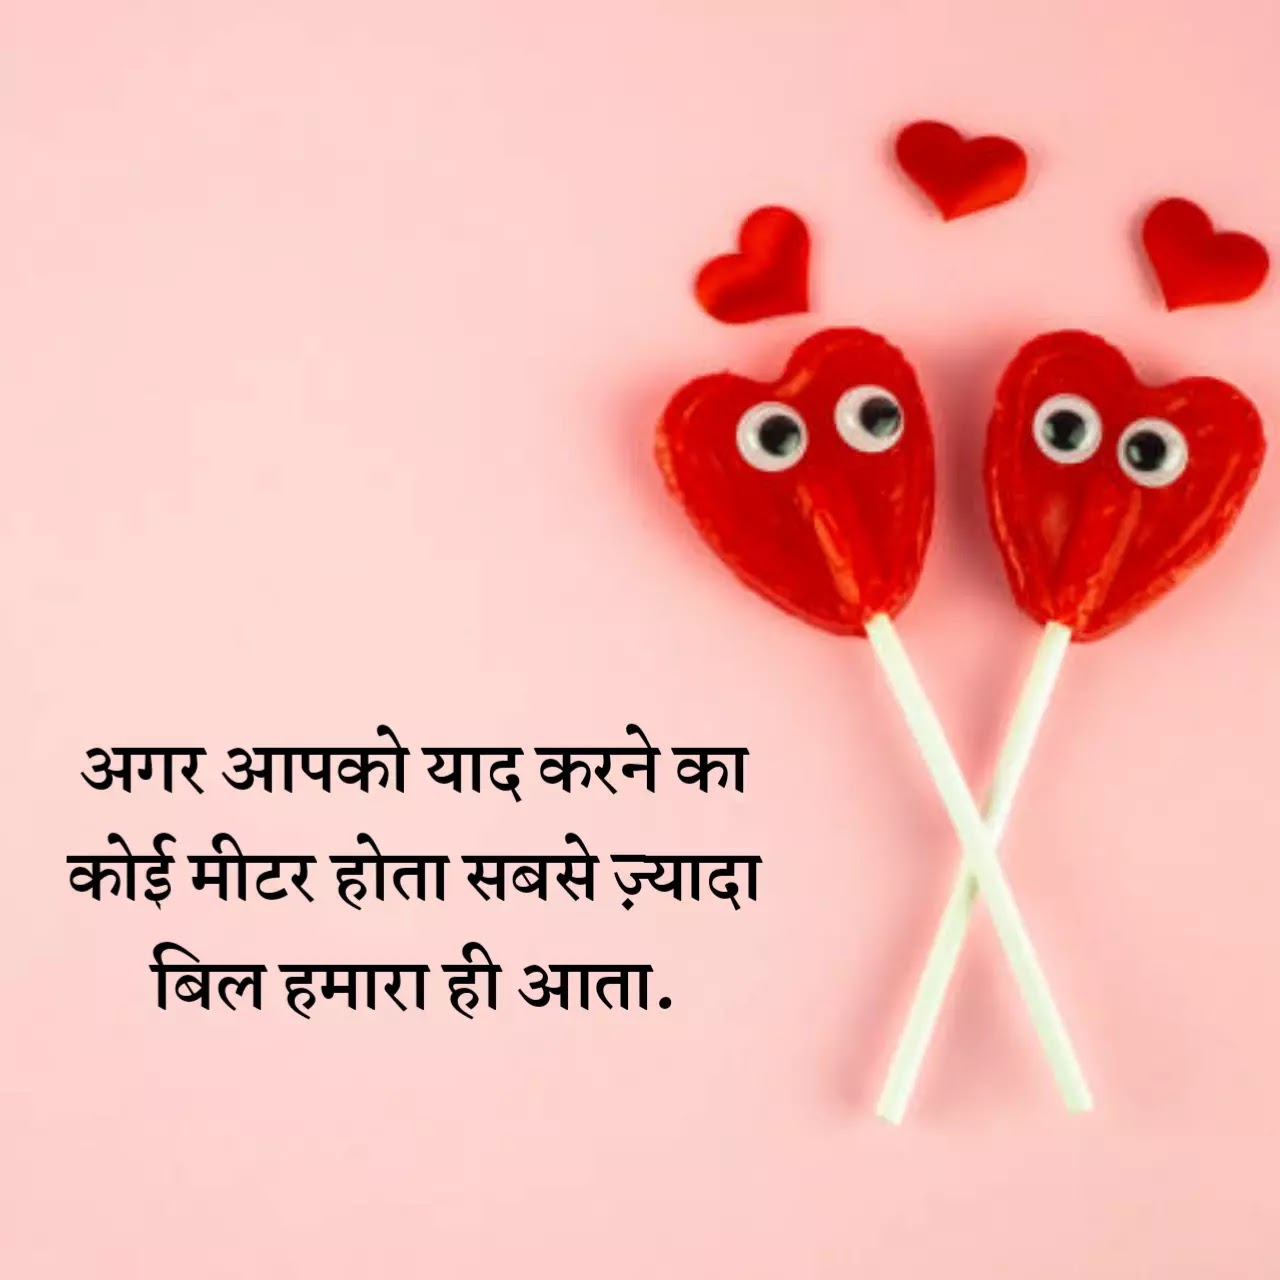 Hindi love status in Love Video